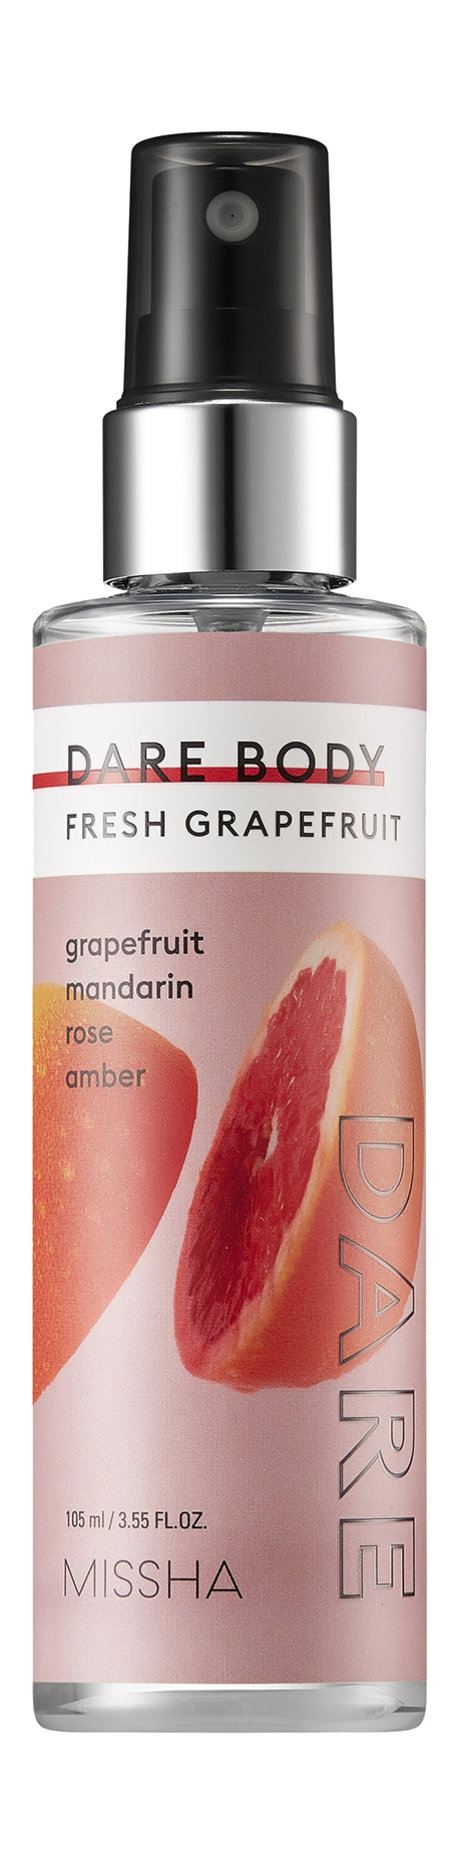 missha dare body fresh grapefruit